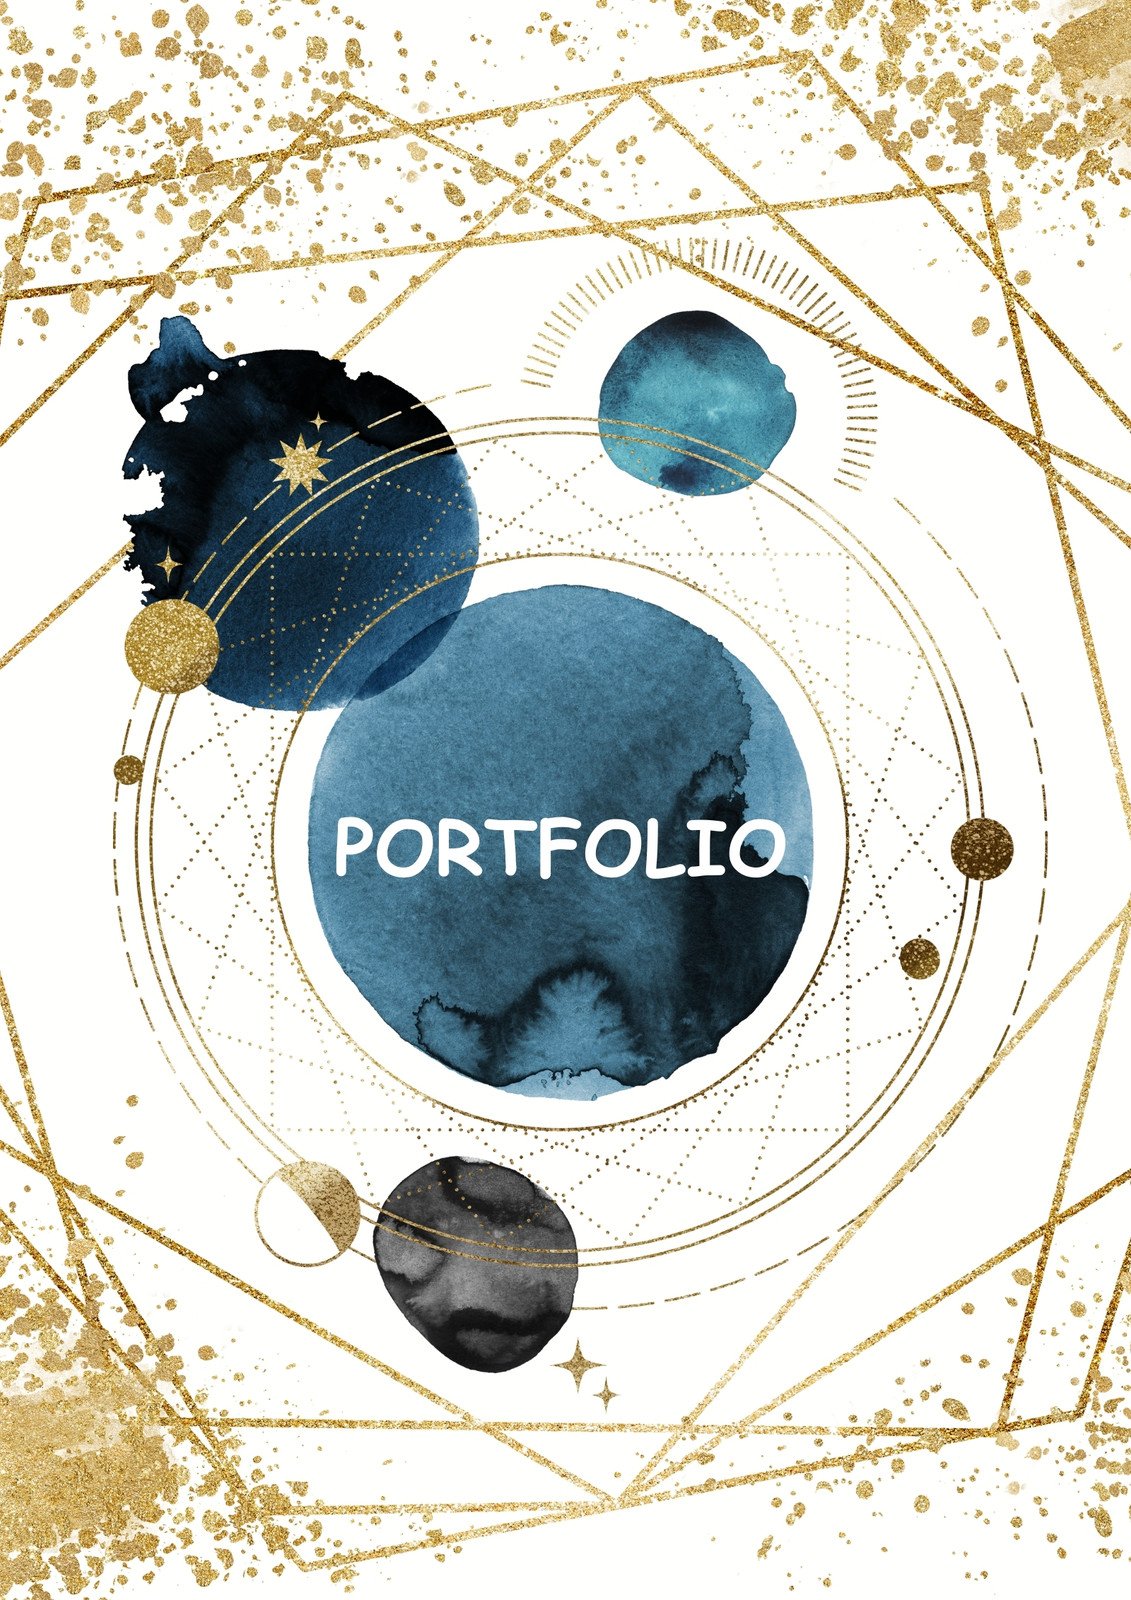 my portfolio cover page designs